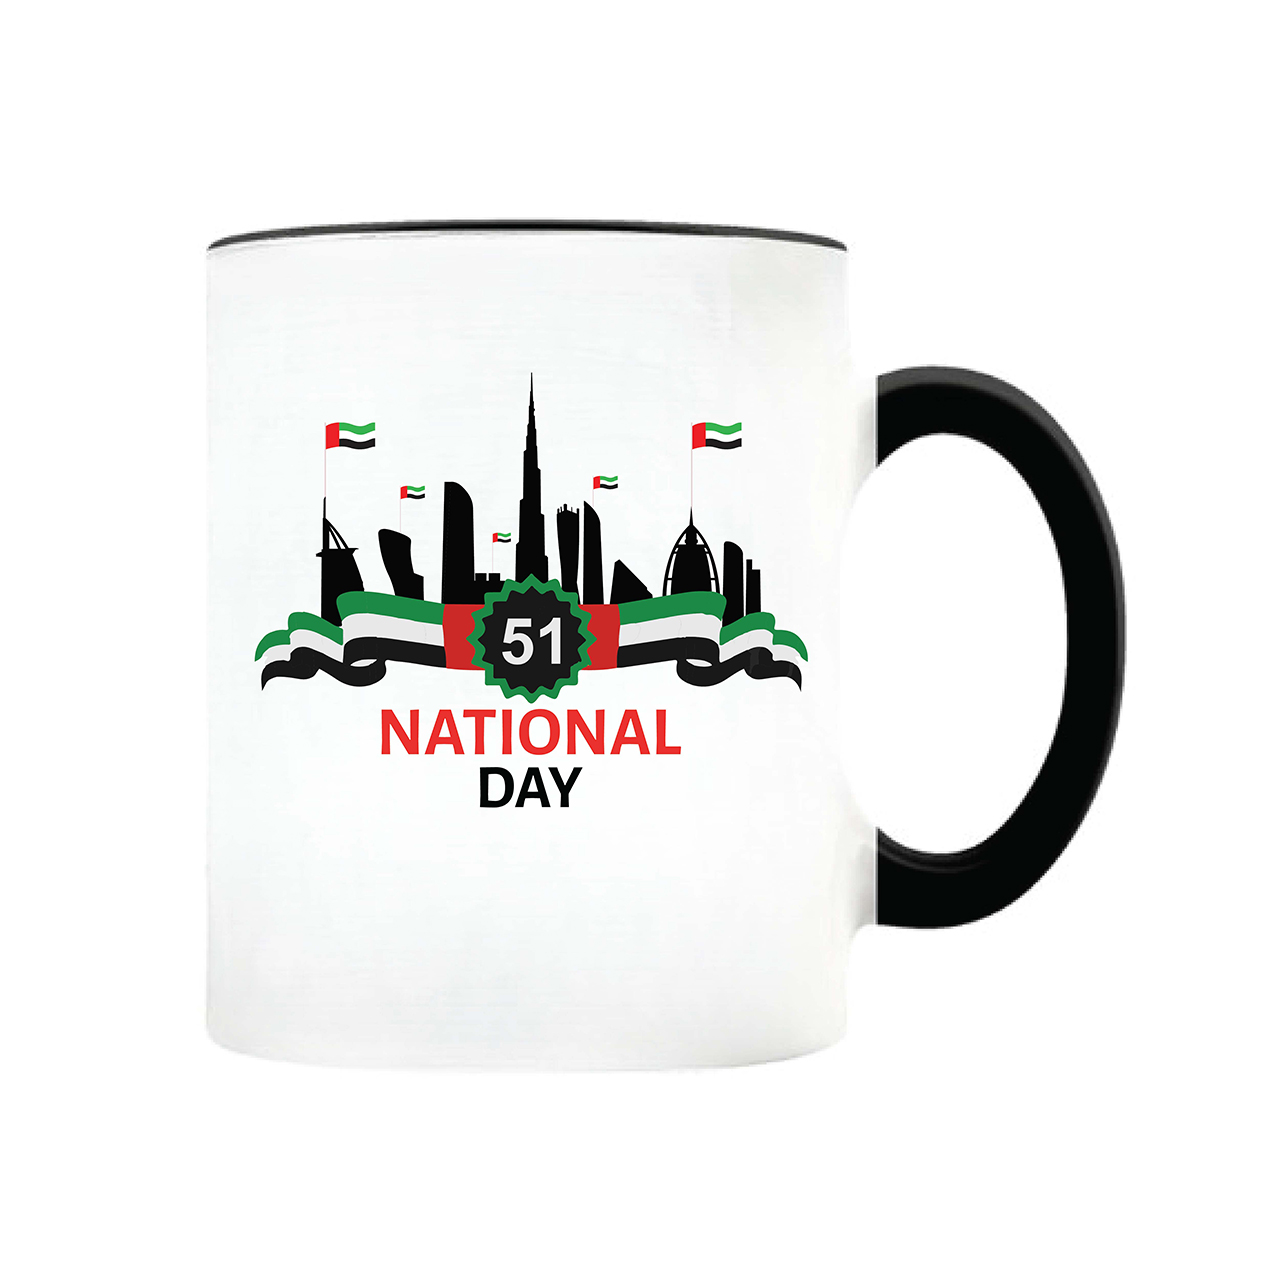 Uae national day ceramic mug design